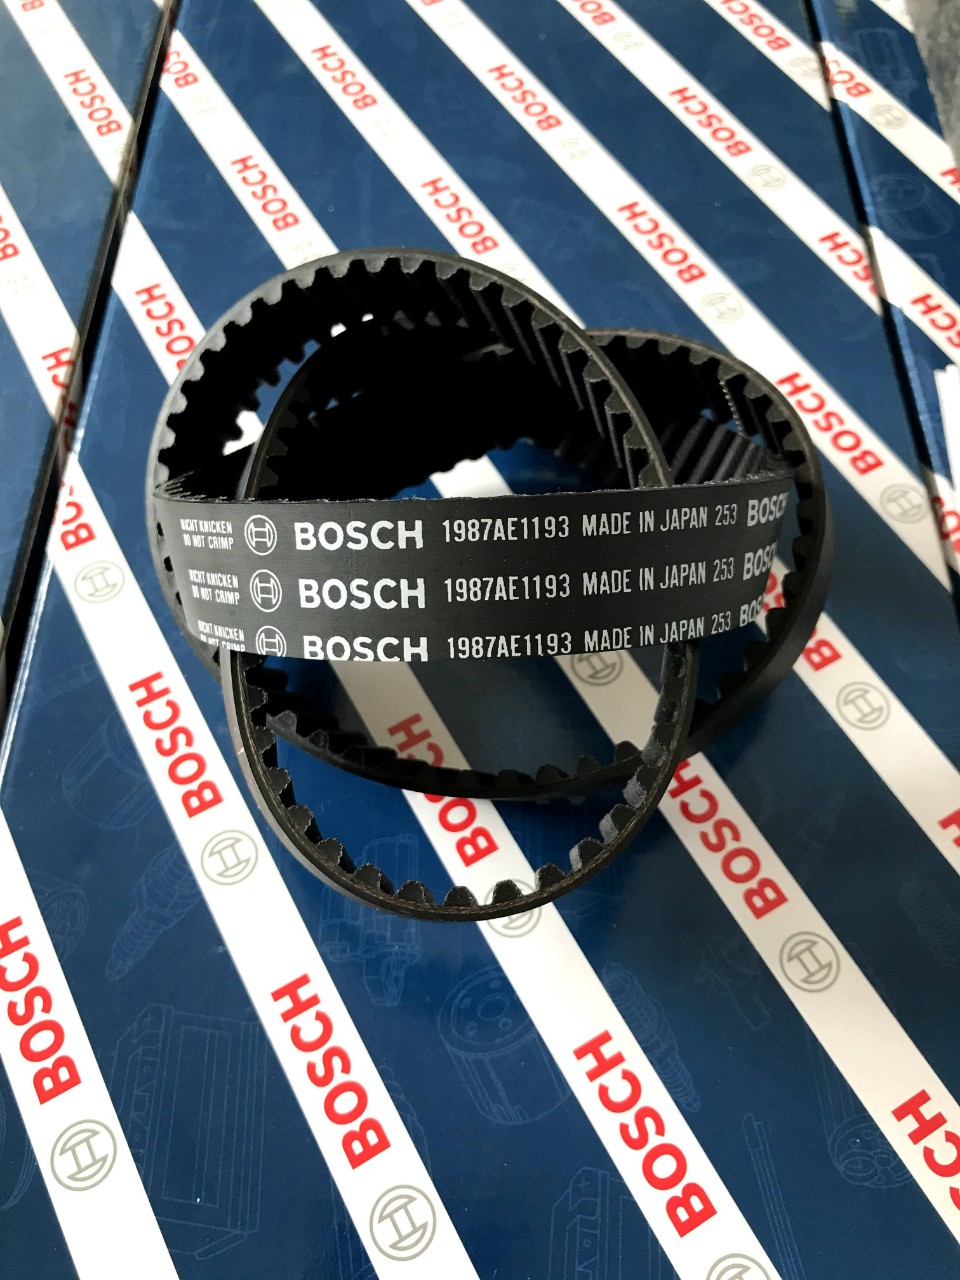 Dây curoa Bosch 1193 (141 x 25)-Nissan Cefiro